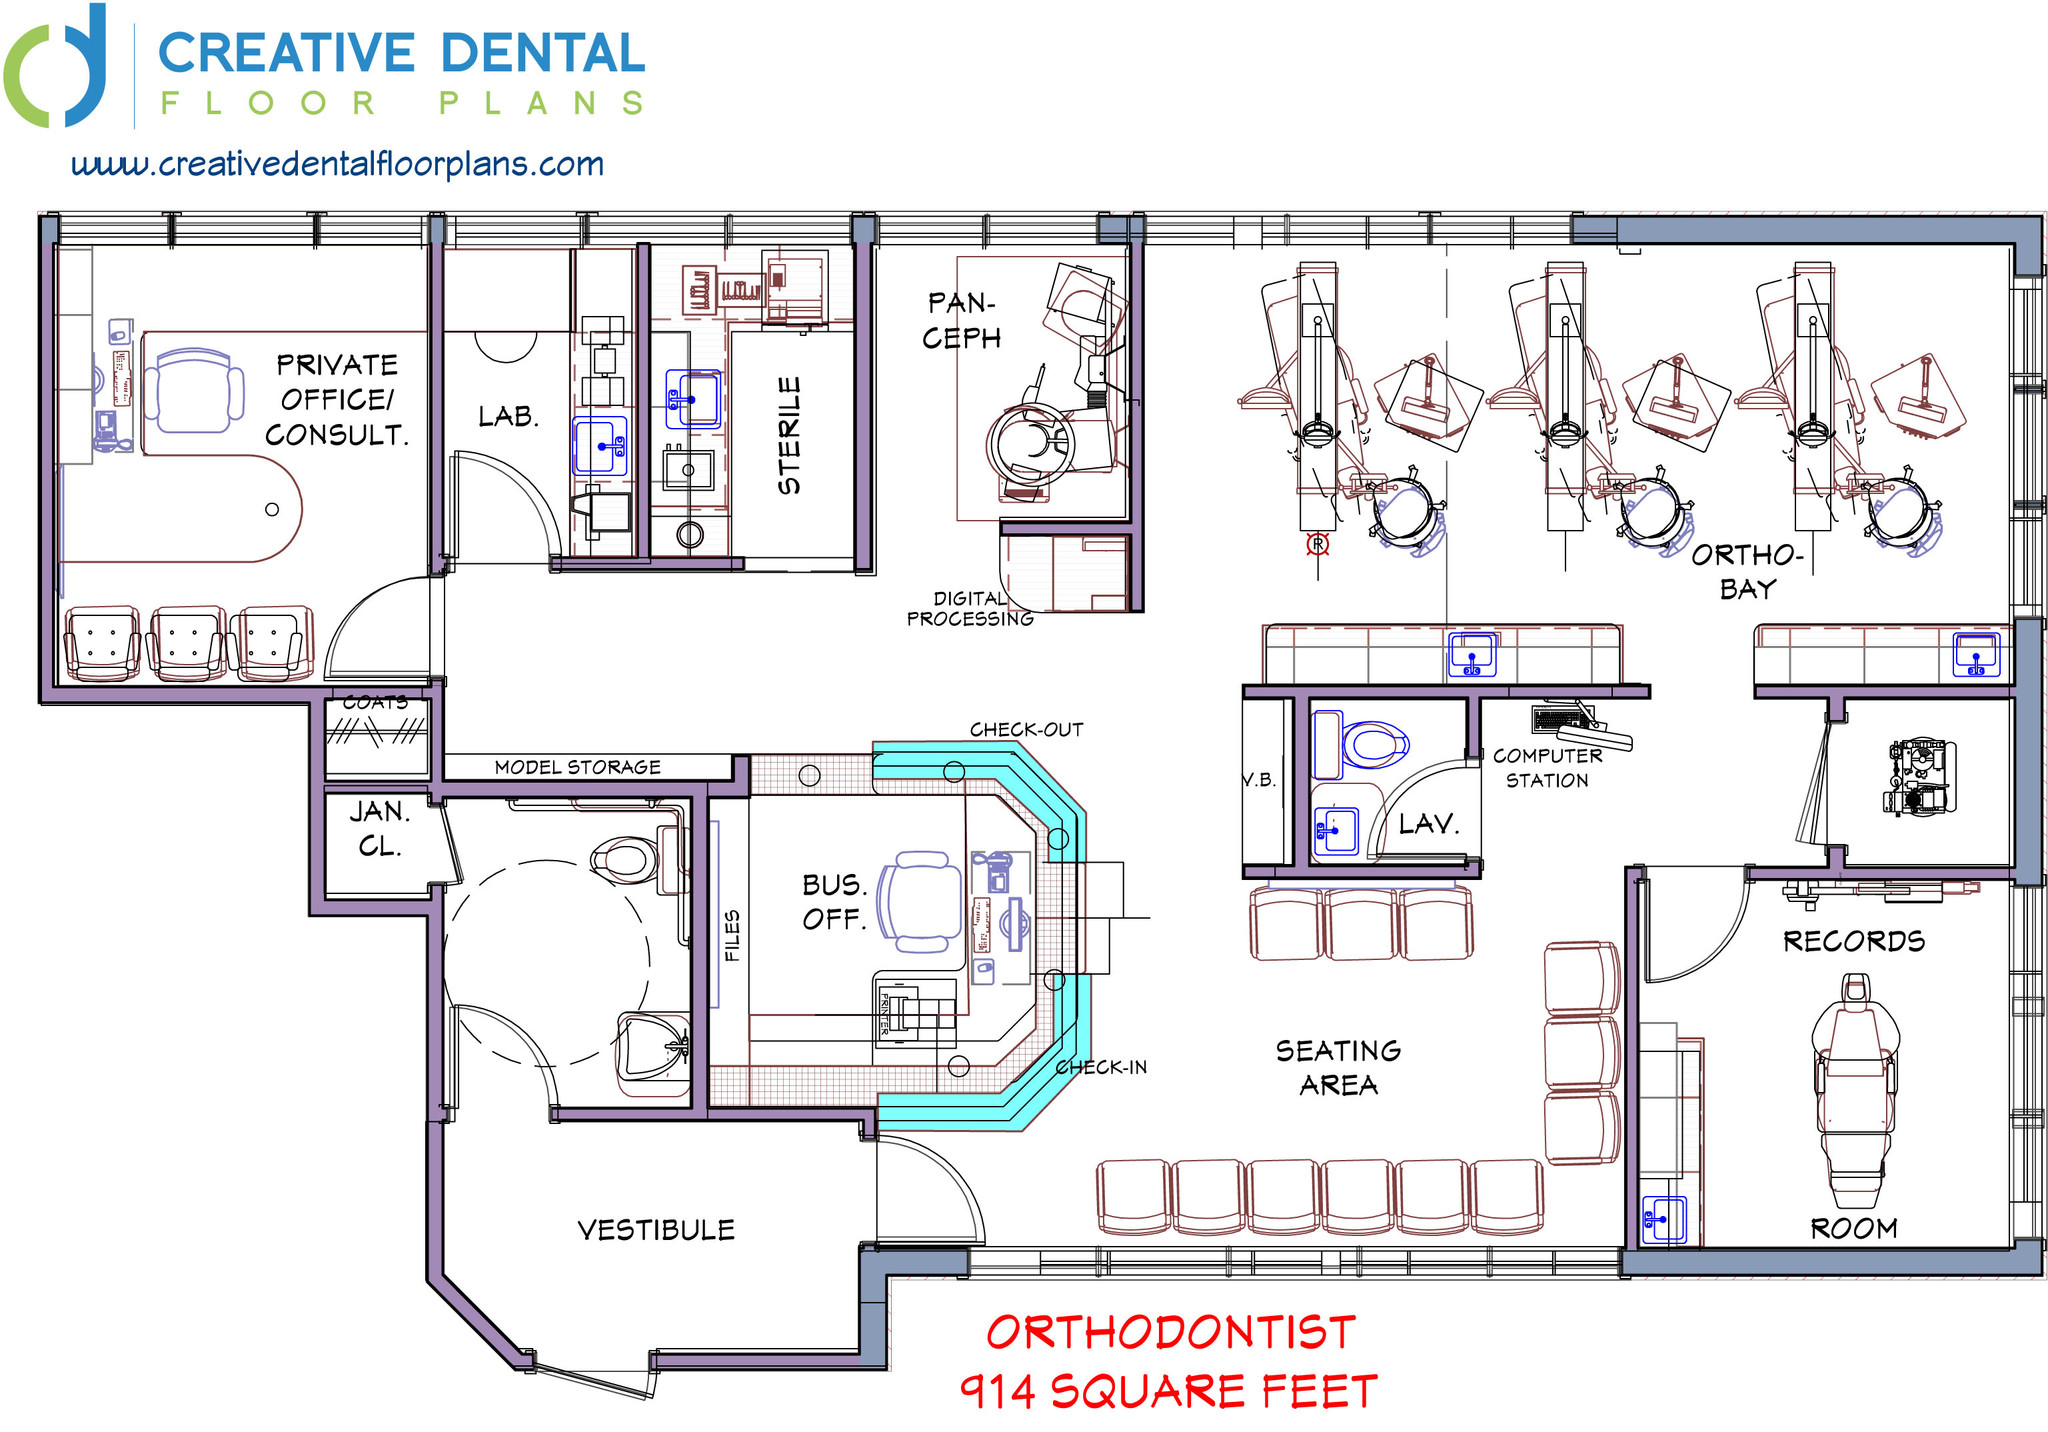 Creative Dental Floor Plans Orthodontist Floor Plans